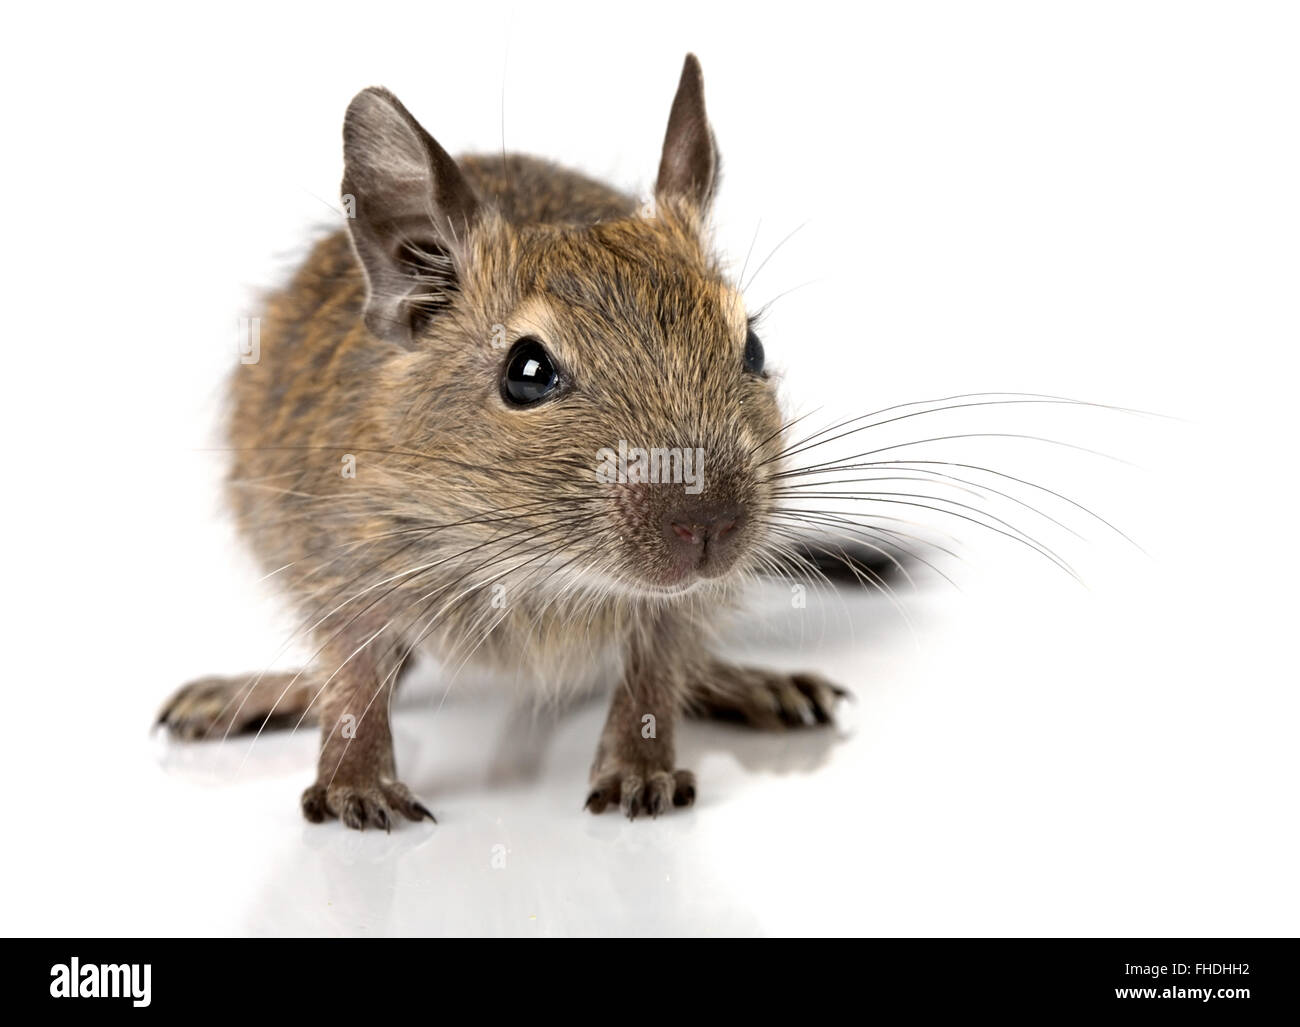 cute small baby rodent degu pet Stock Photo